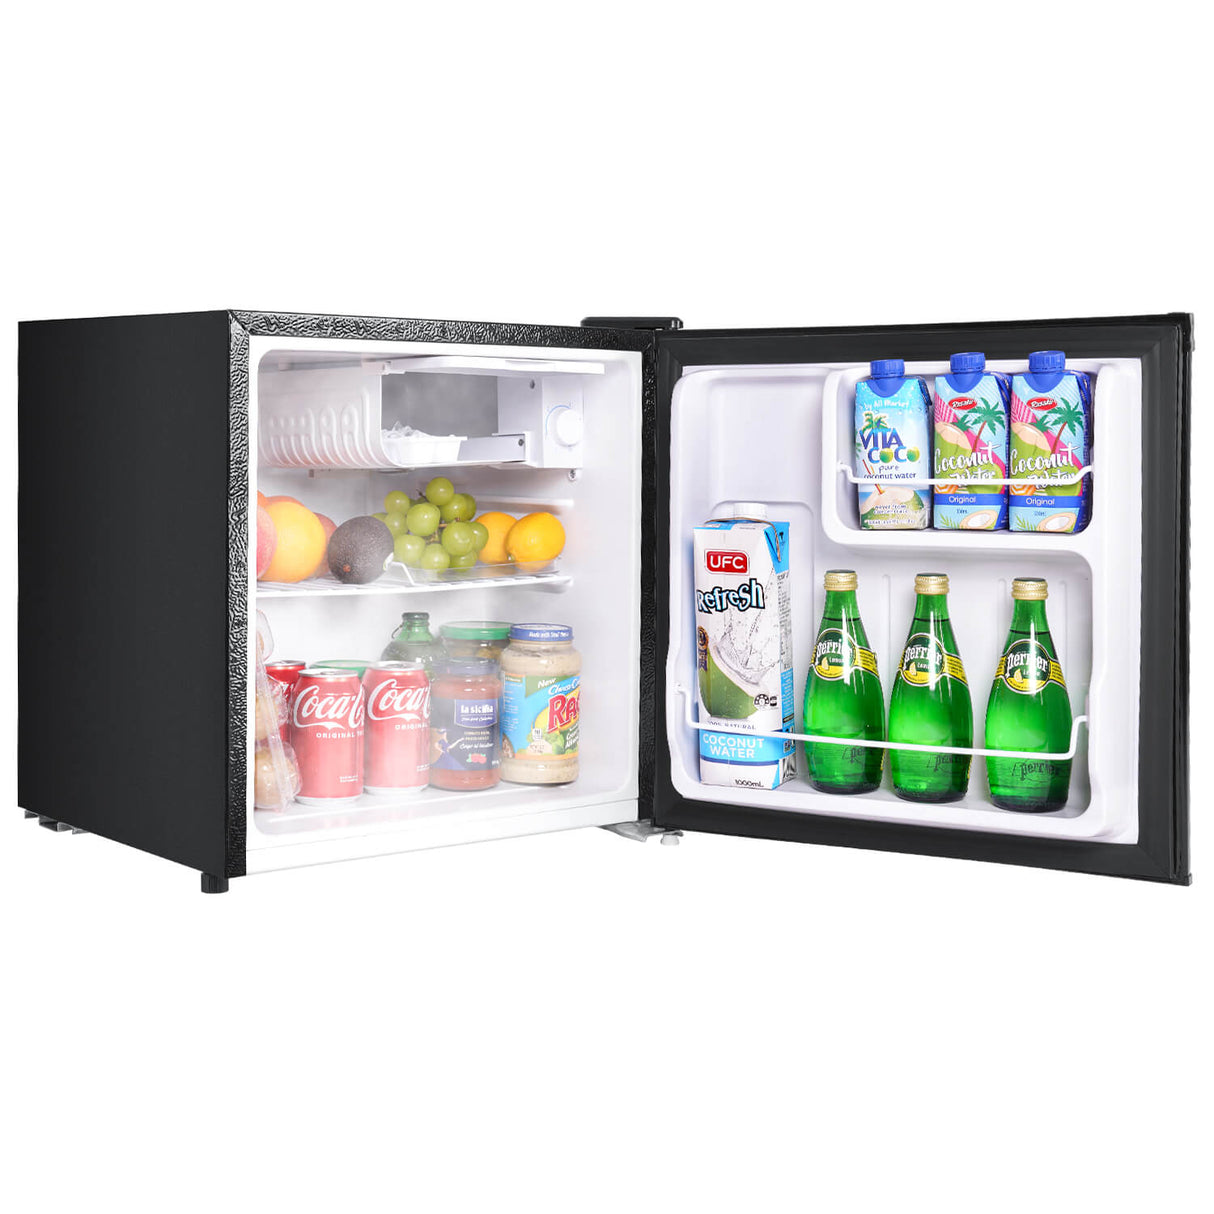 4.0 Cu.Ft Compact Refrigerator, Black, Removable shelves – Upstreman